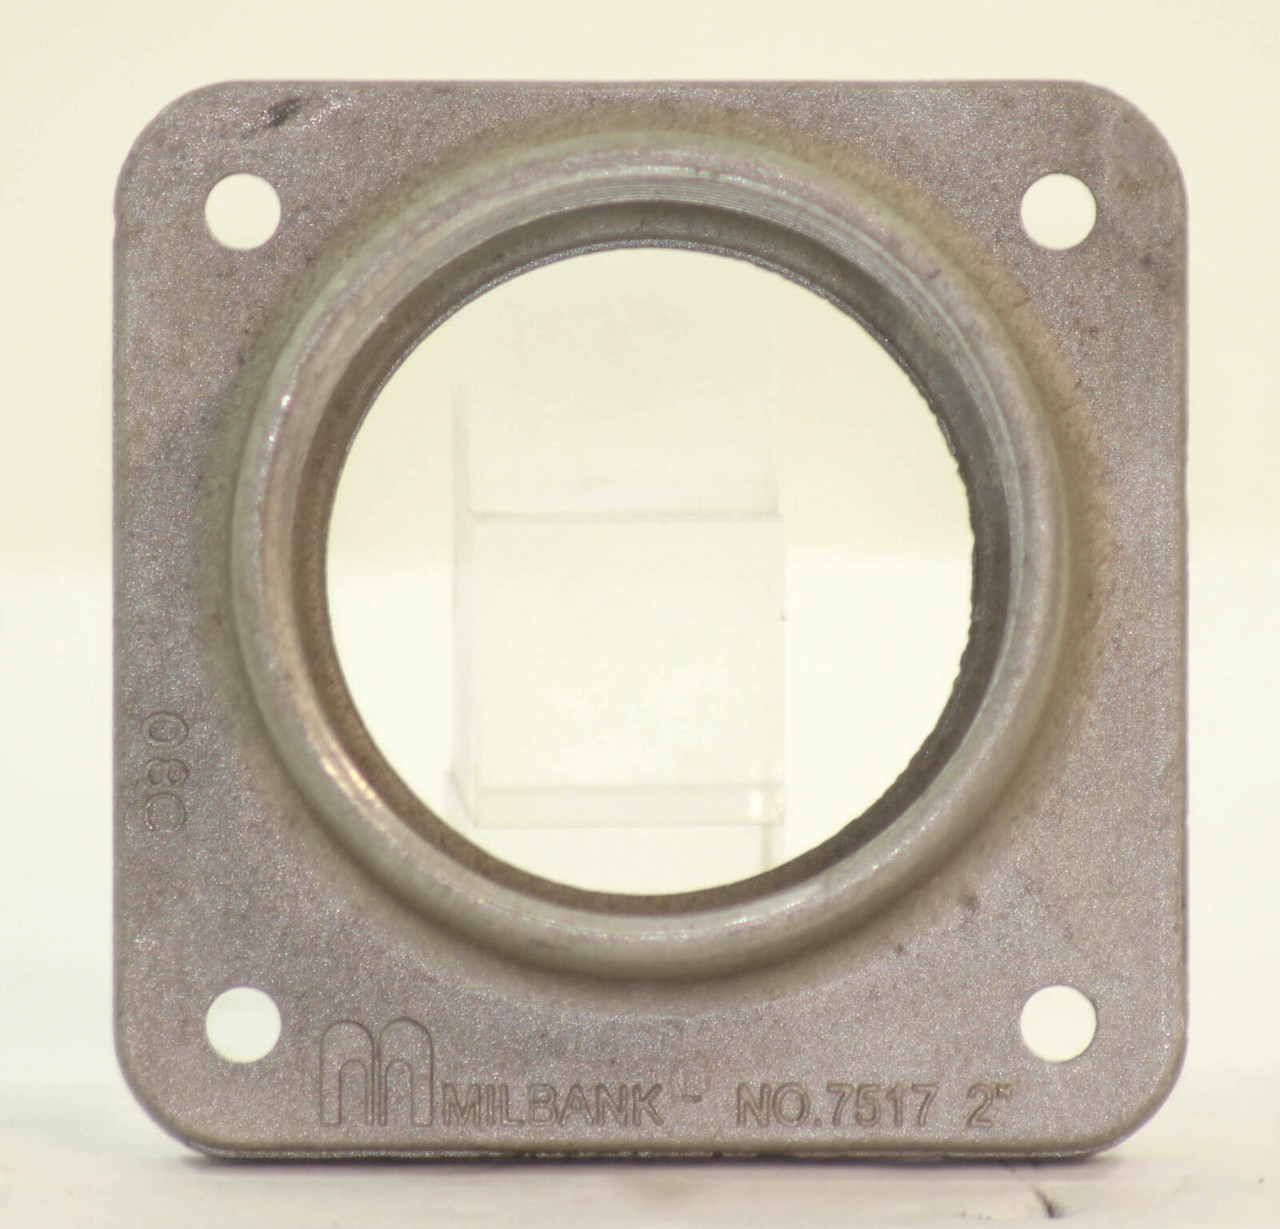 Milbank 7517 Conduit Hub Material: Aluminum Diameter: 2 Inches